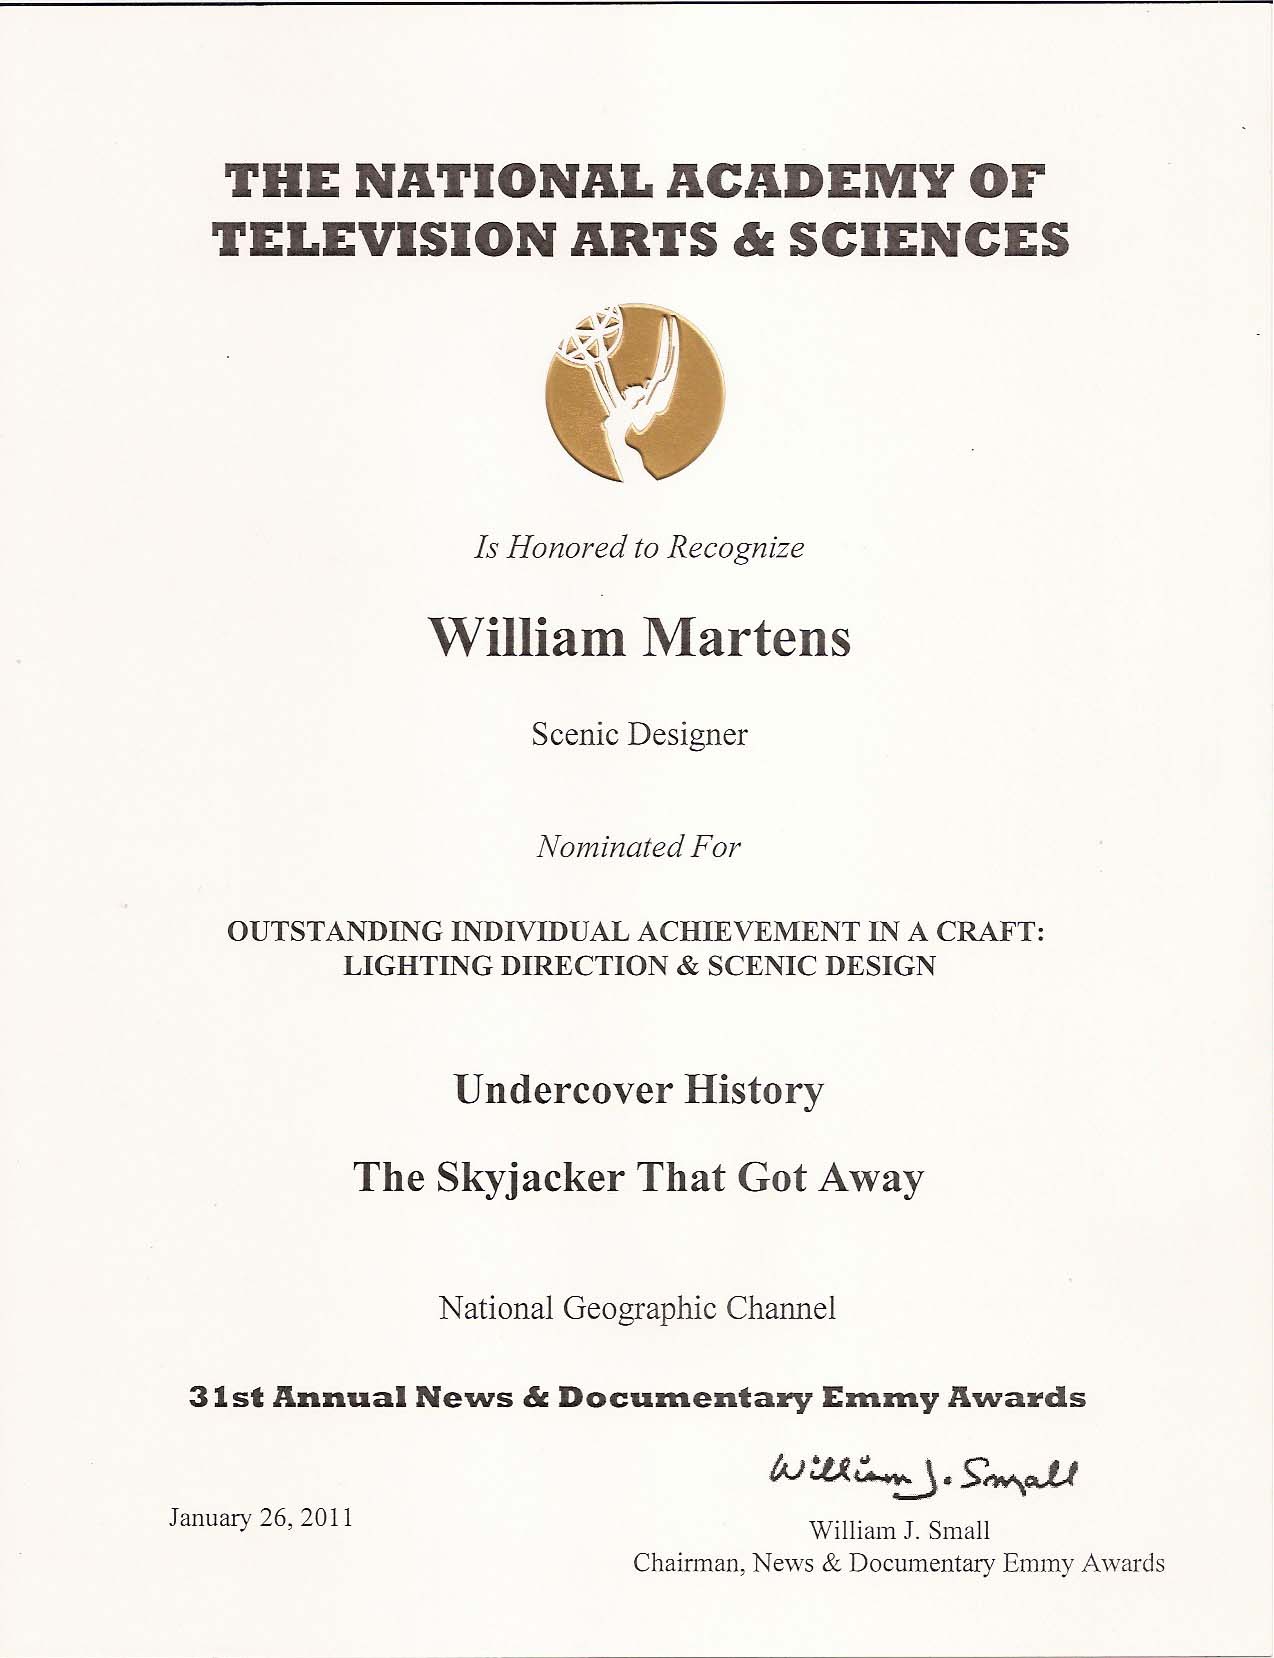 Emmy nomination certificate